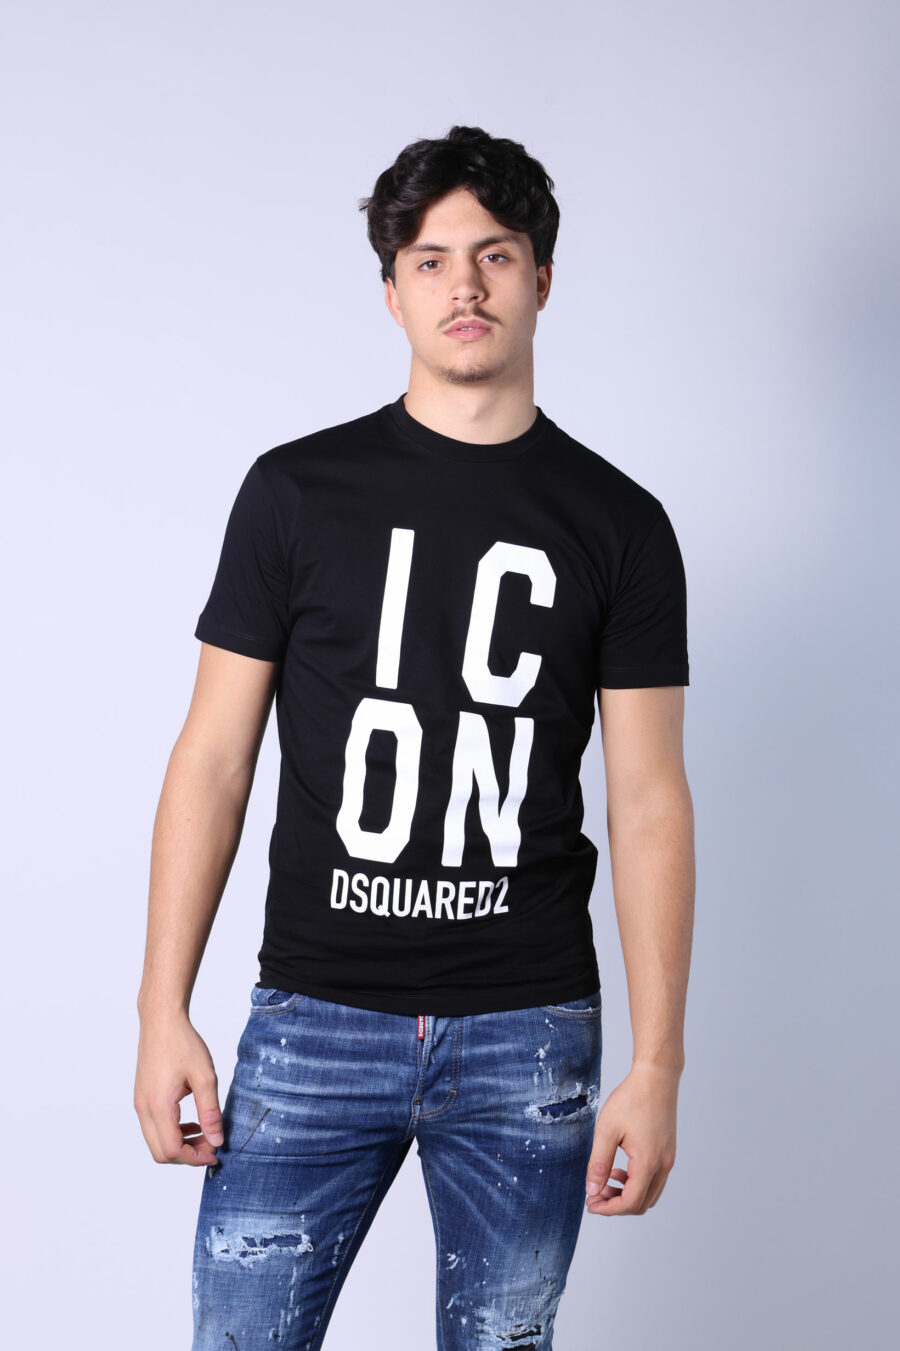 Schwarzes T-Shirt mit quadratischem "Icon" Maxilogo - Untitled Catalog 05283